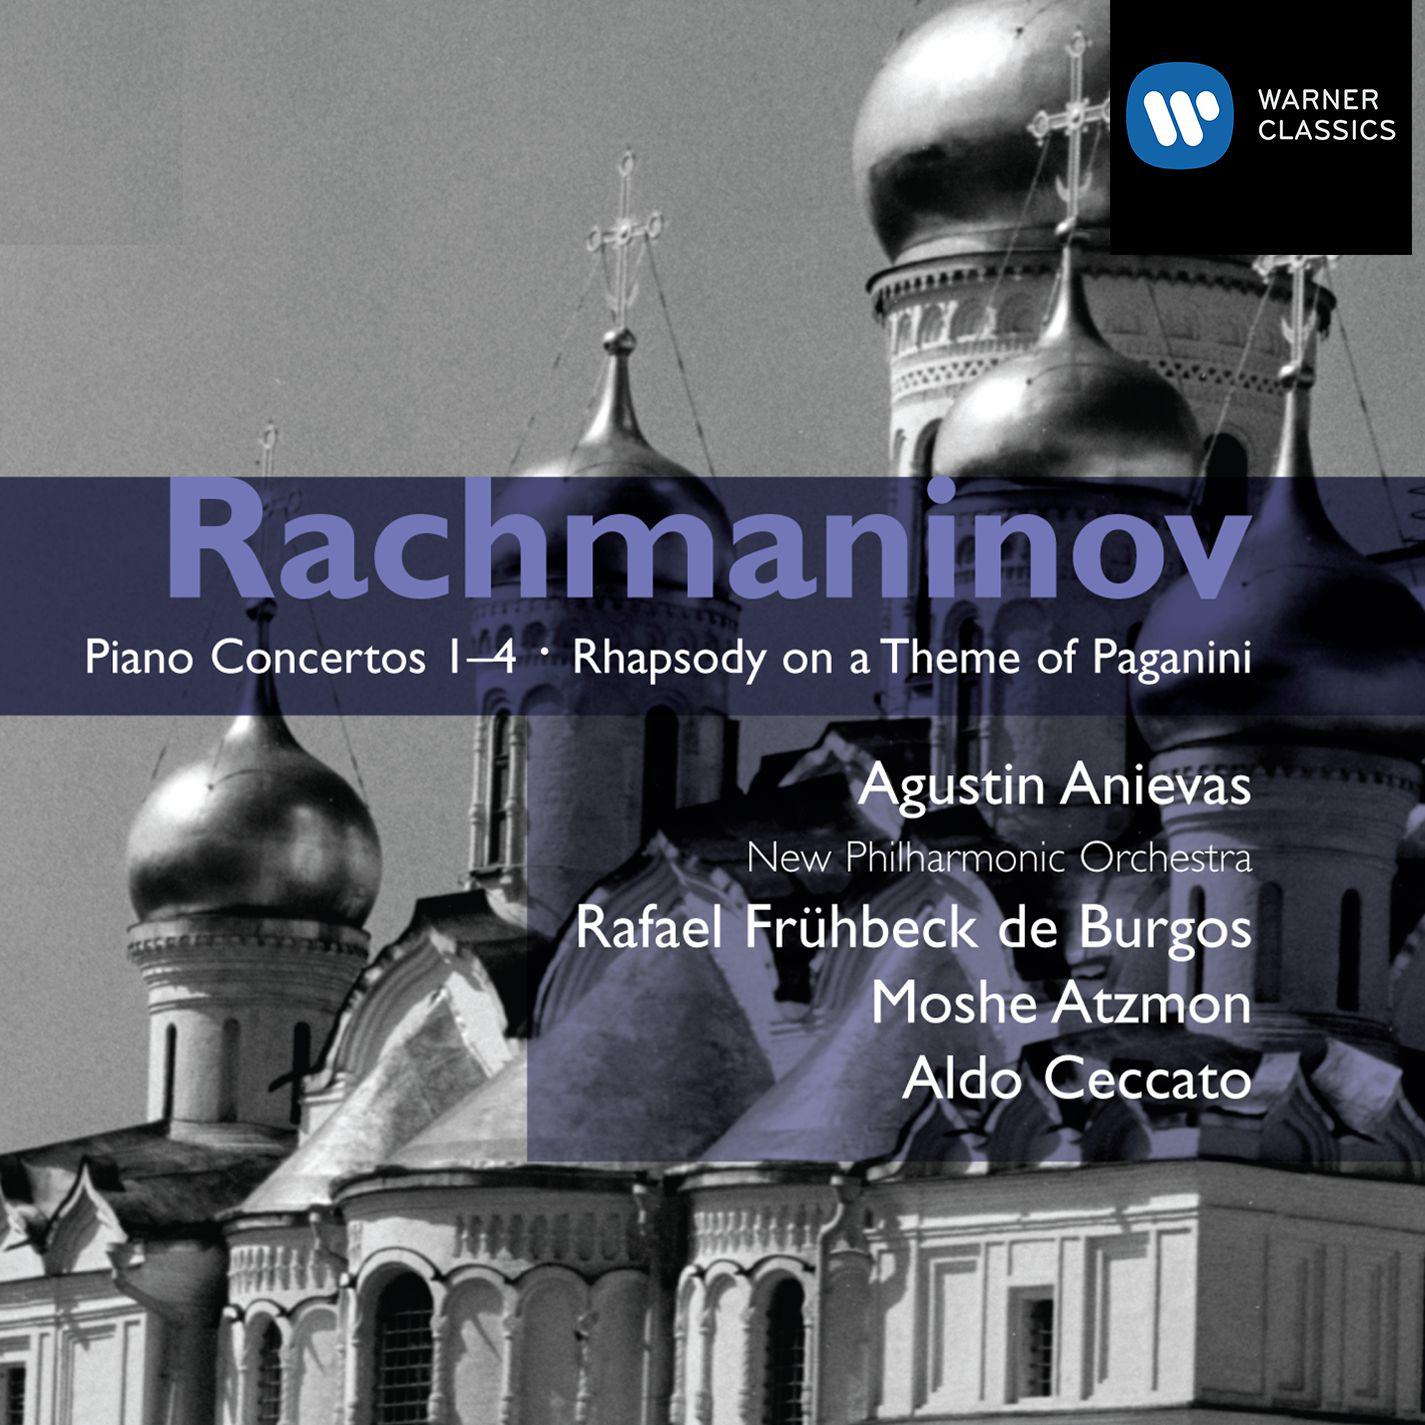 Rhapsody on a Theme of Paganini, Op. 43:Variation VI. L'istesso tempo